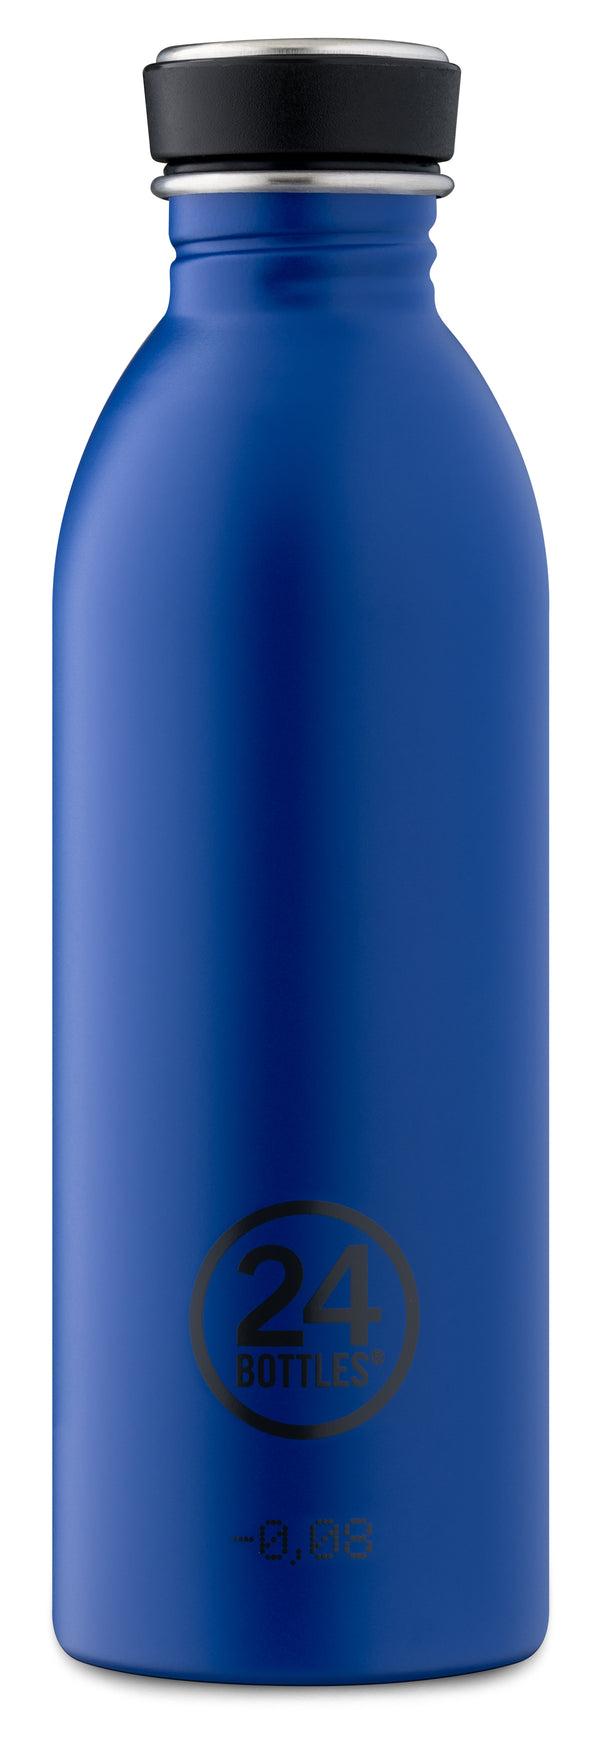 قنينة ماء معدنية - 1000 مل - أزرق -  URBAN Bottle (1 L) Lightest Insulated Stainless Steel Water Bottle, Eco-Friendly Reusable BPA - 24Bottles - SW1hZ2U6MzU4ODY5